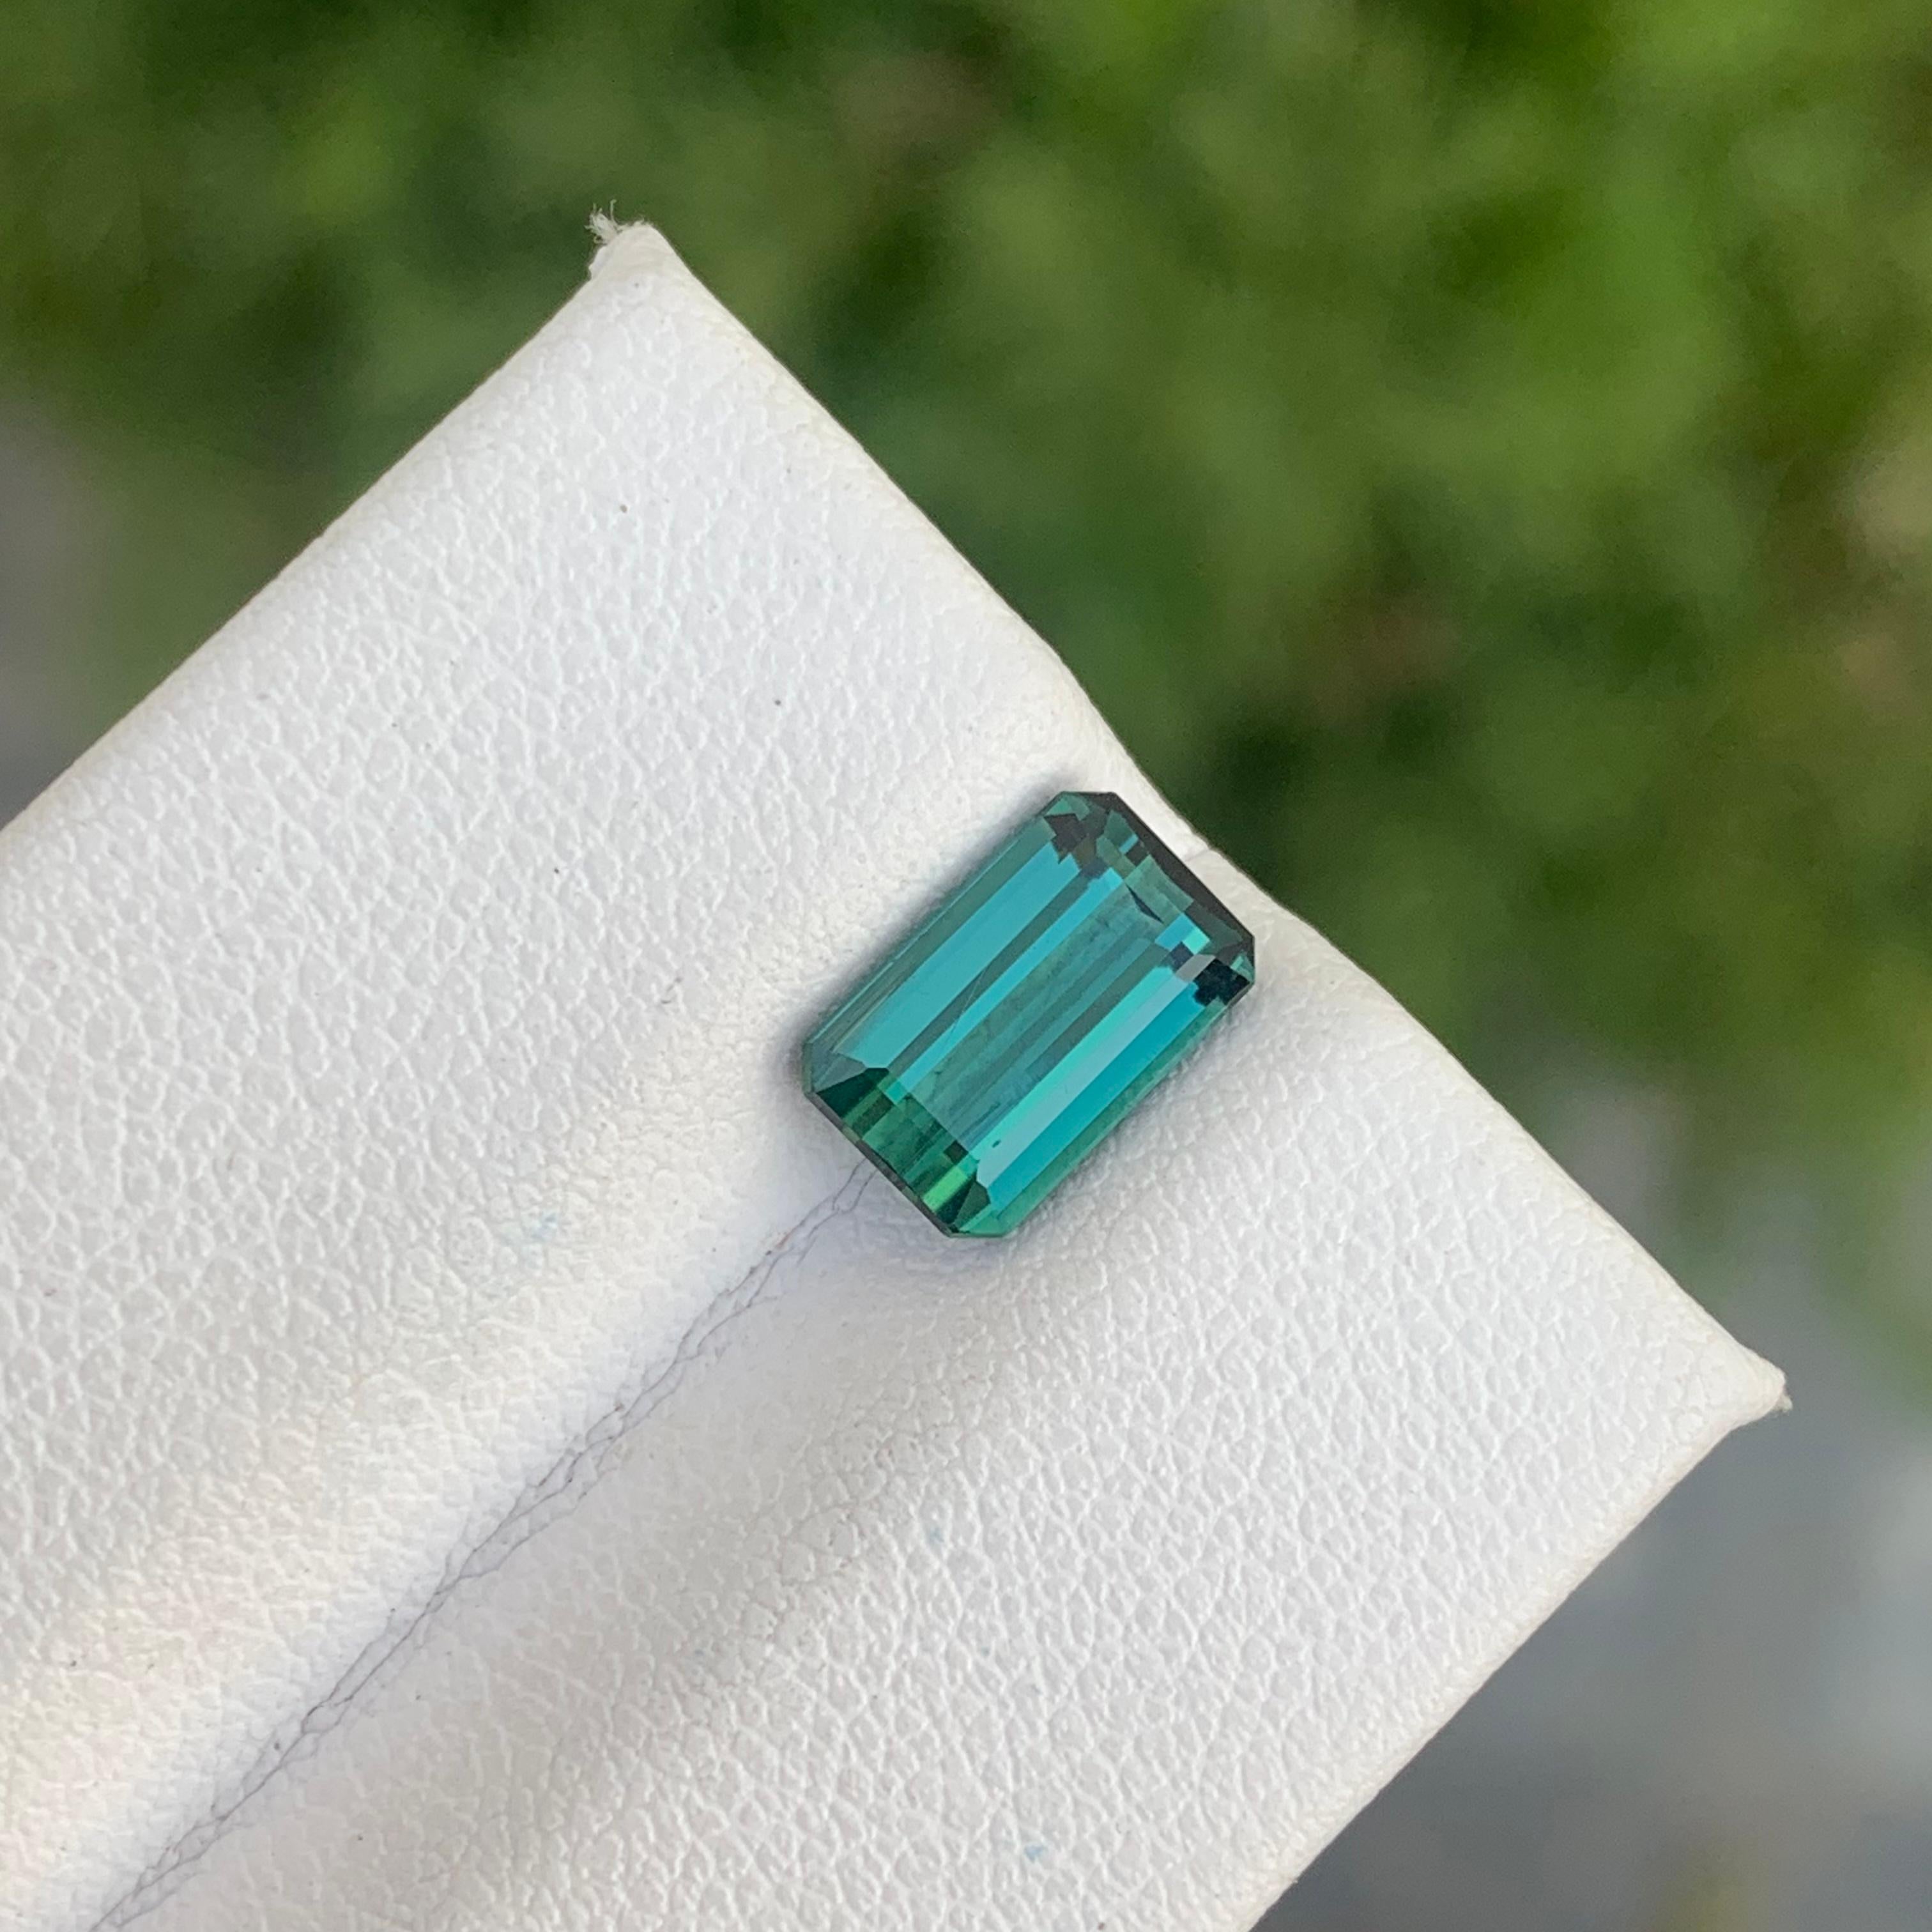 Genuine 1.90 Carat Natural Loose Indicolite Tourmaline Emerald Cut Gemstone For Sale 3